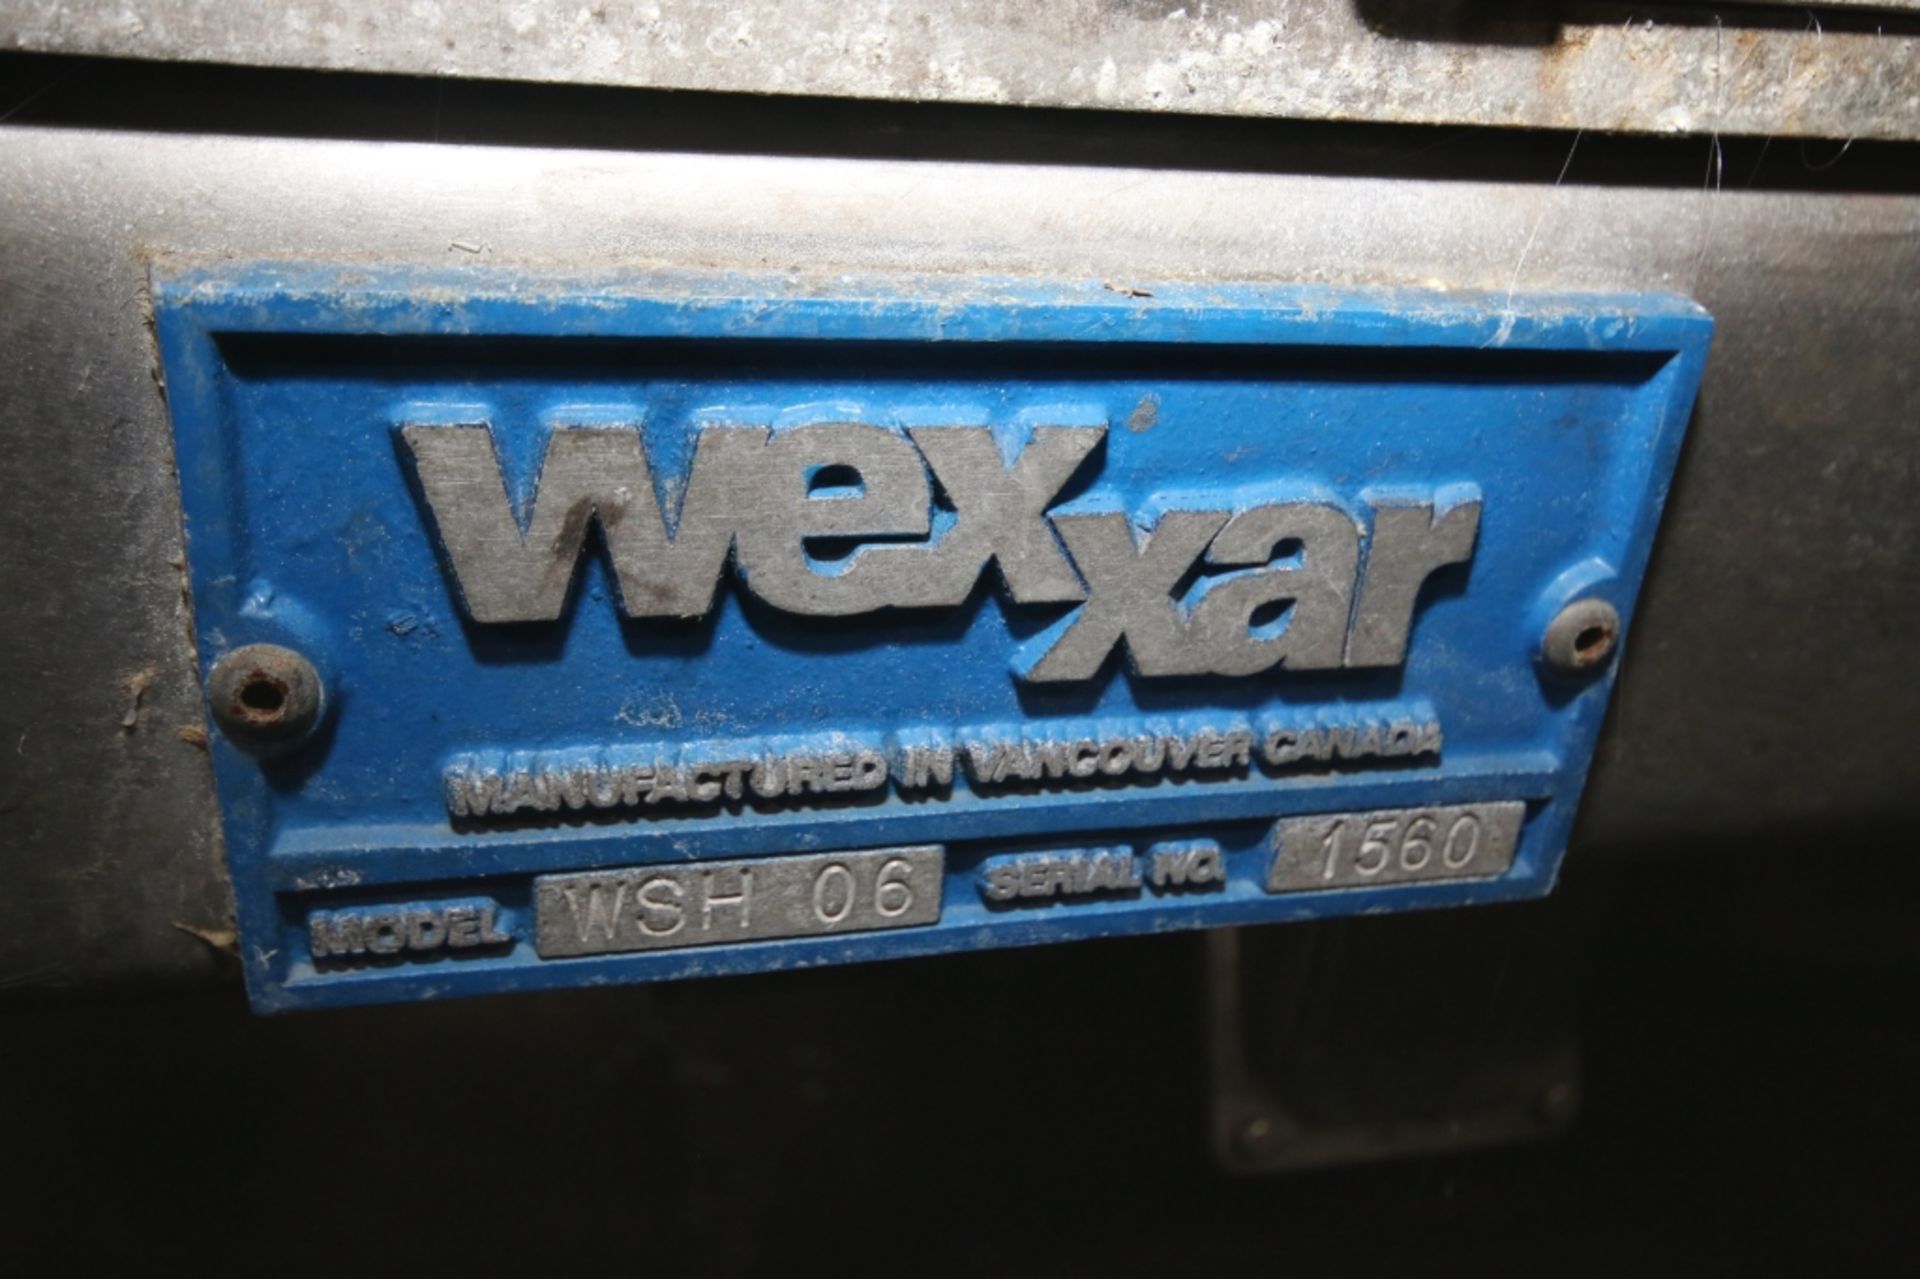 Wexxar Case Sealer with Nordsen Gluer: Model WSH06 S/N 1560: S/S Frame - Image 6 of 6